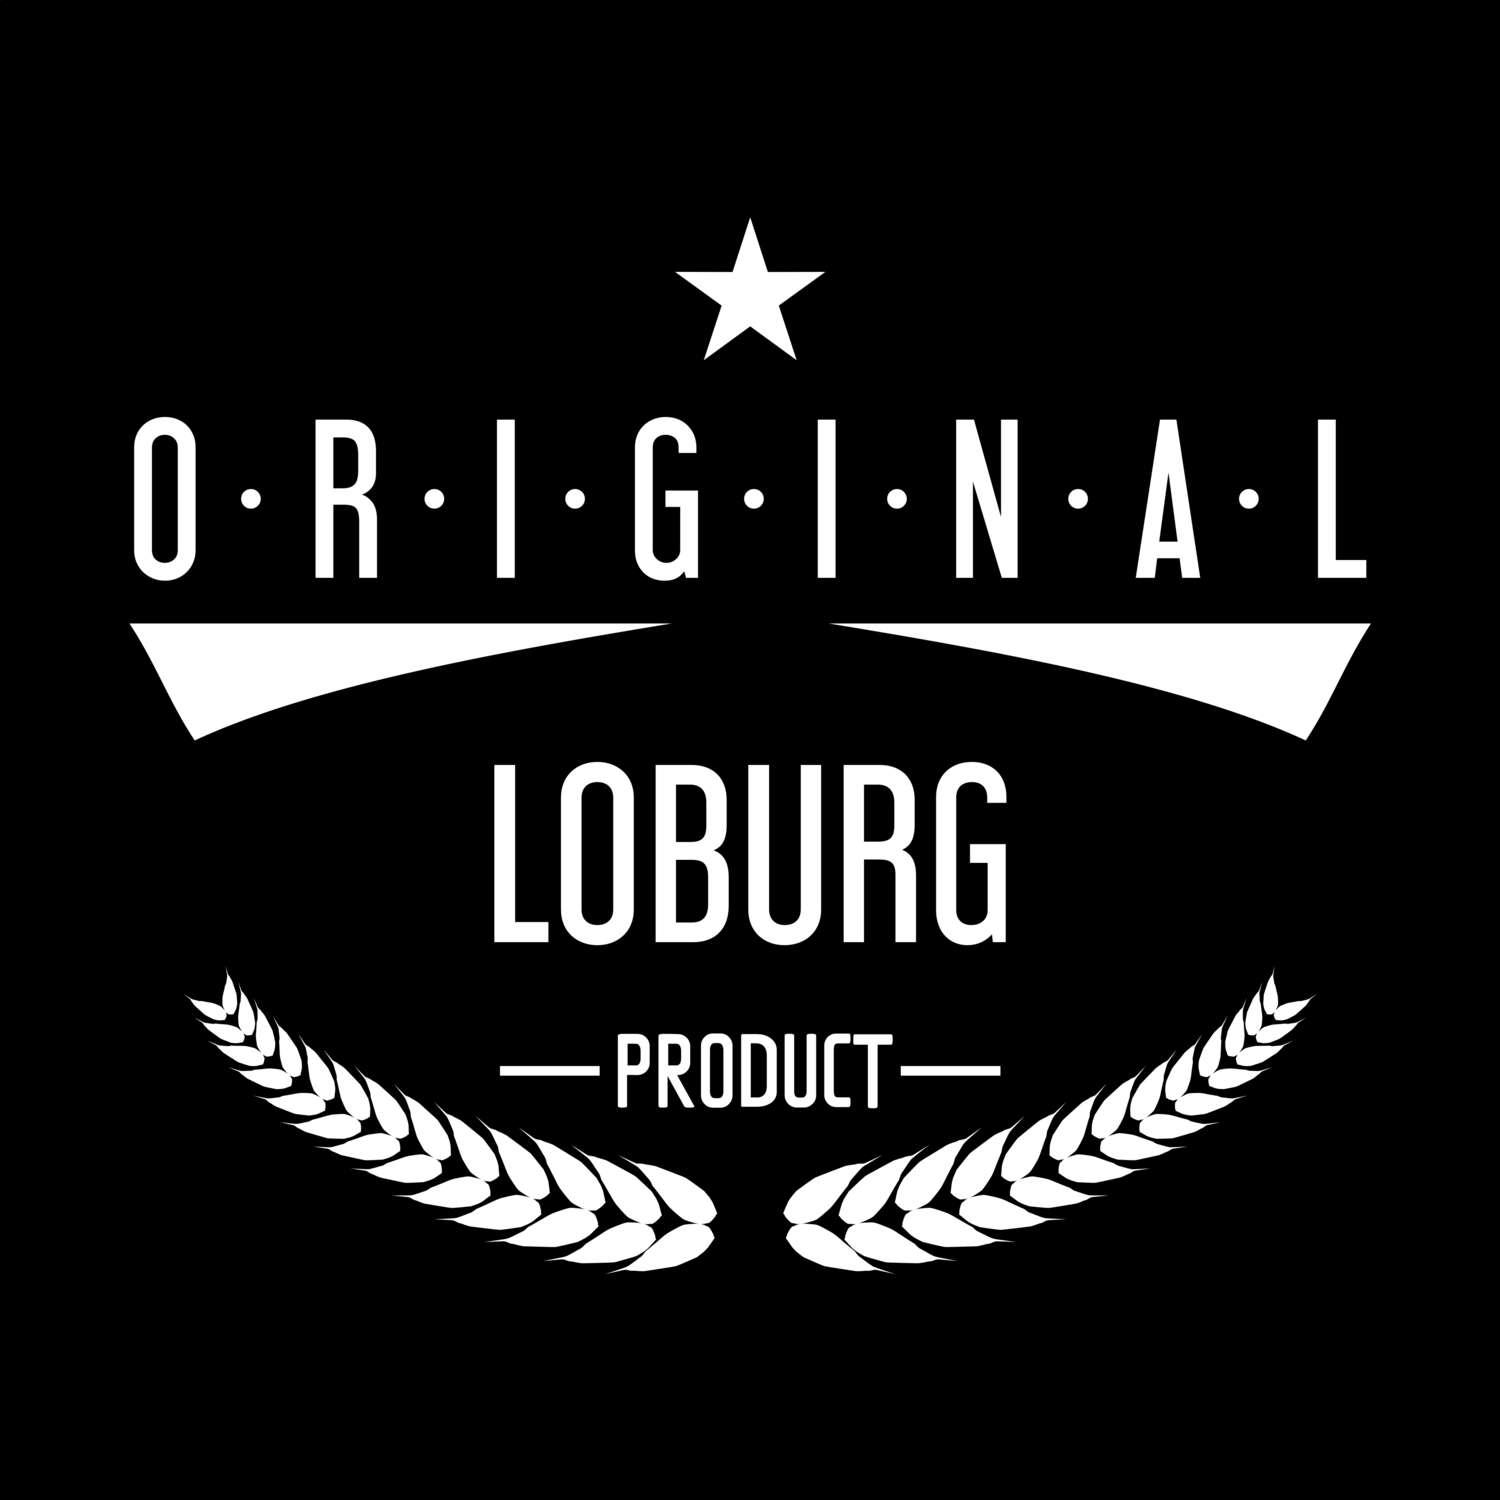 Loburg T-Shirt »Original Product«